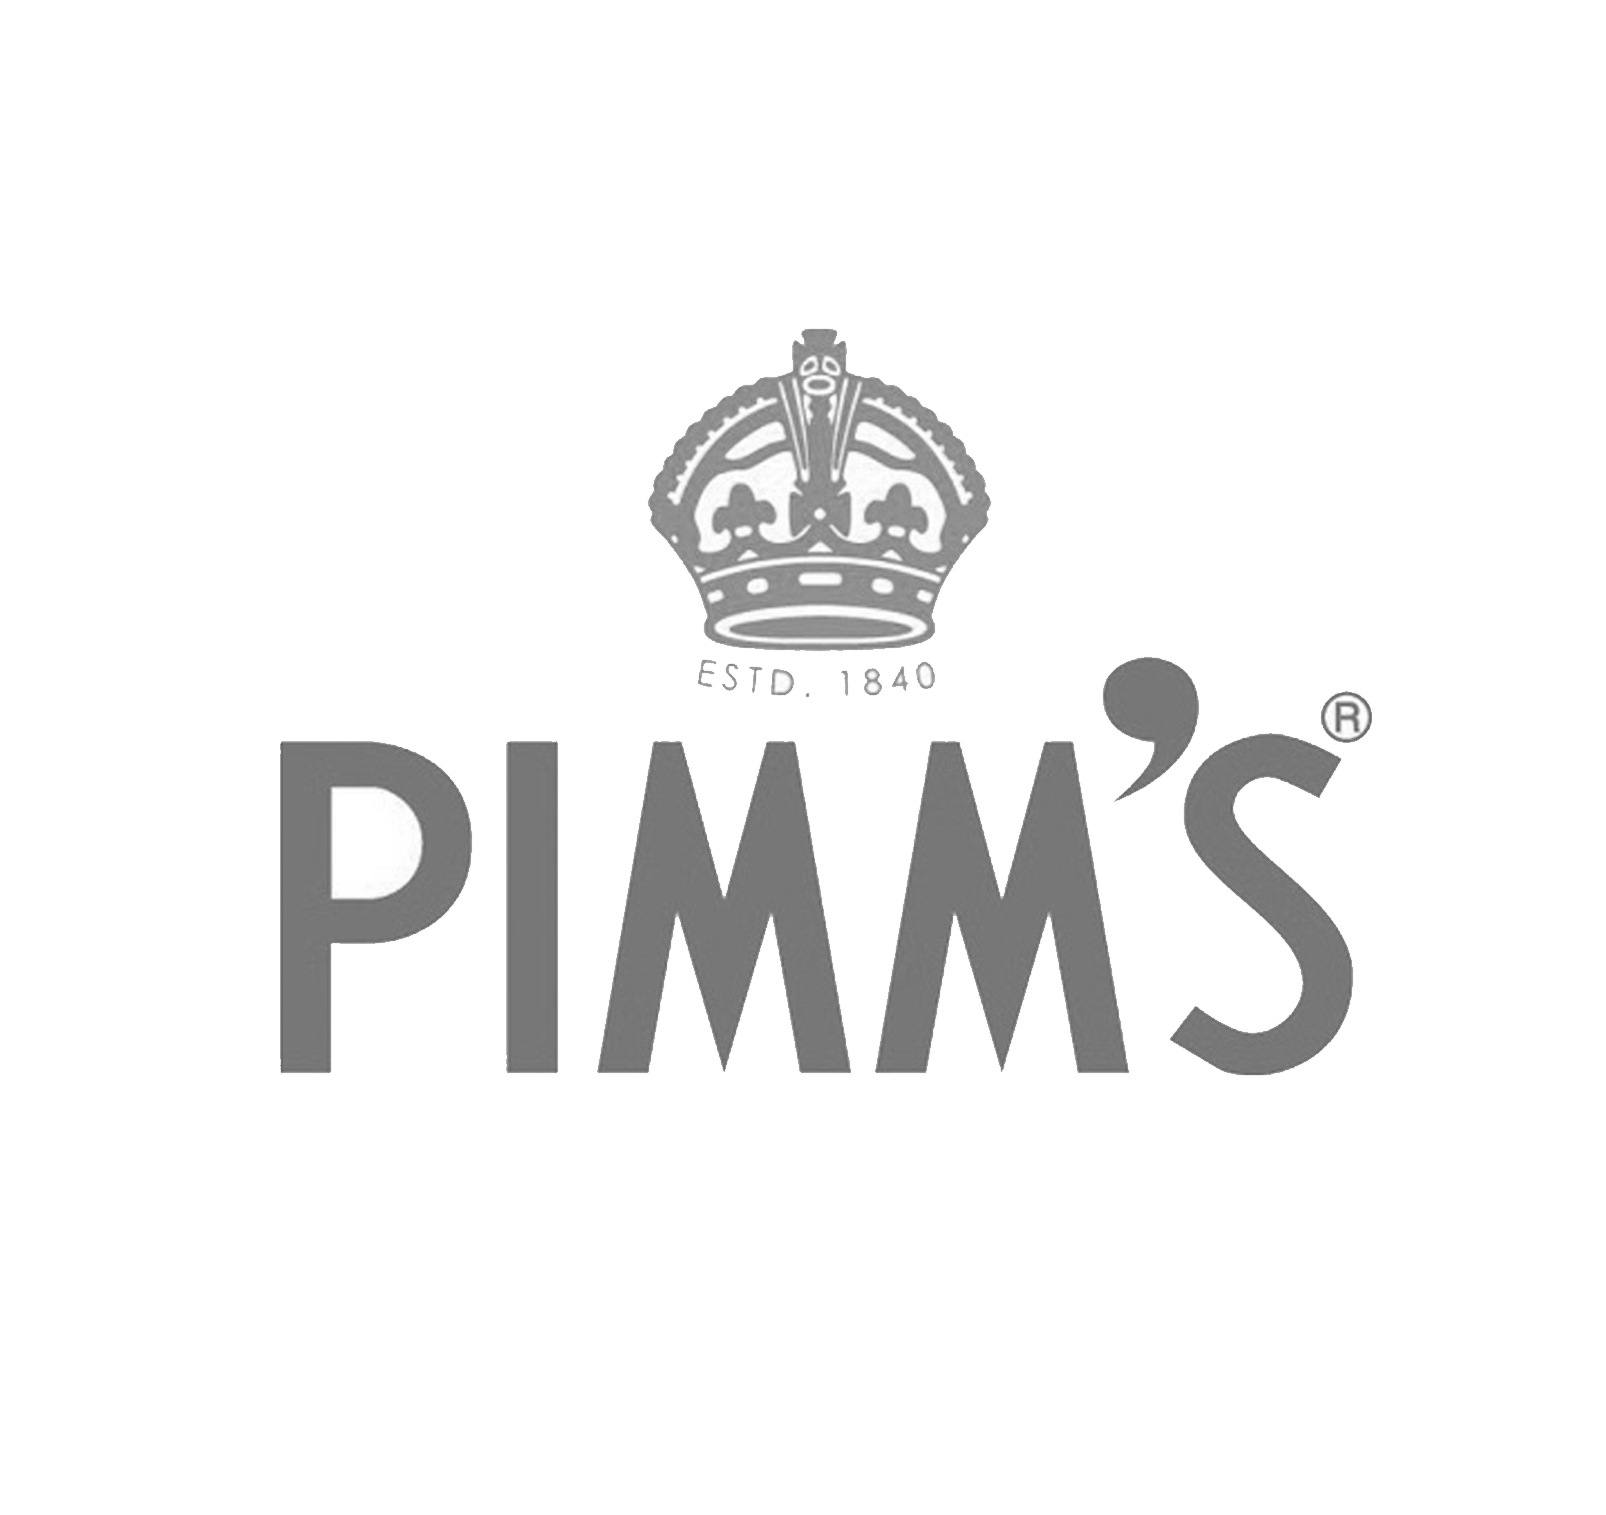 Pimms logo